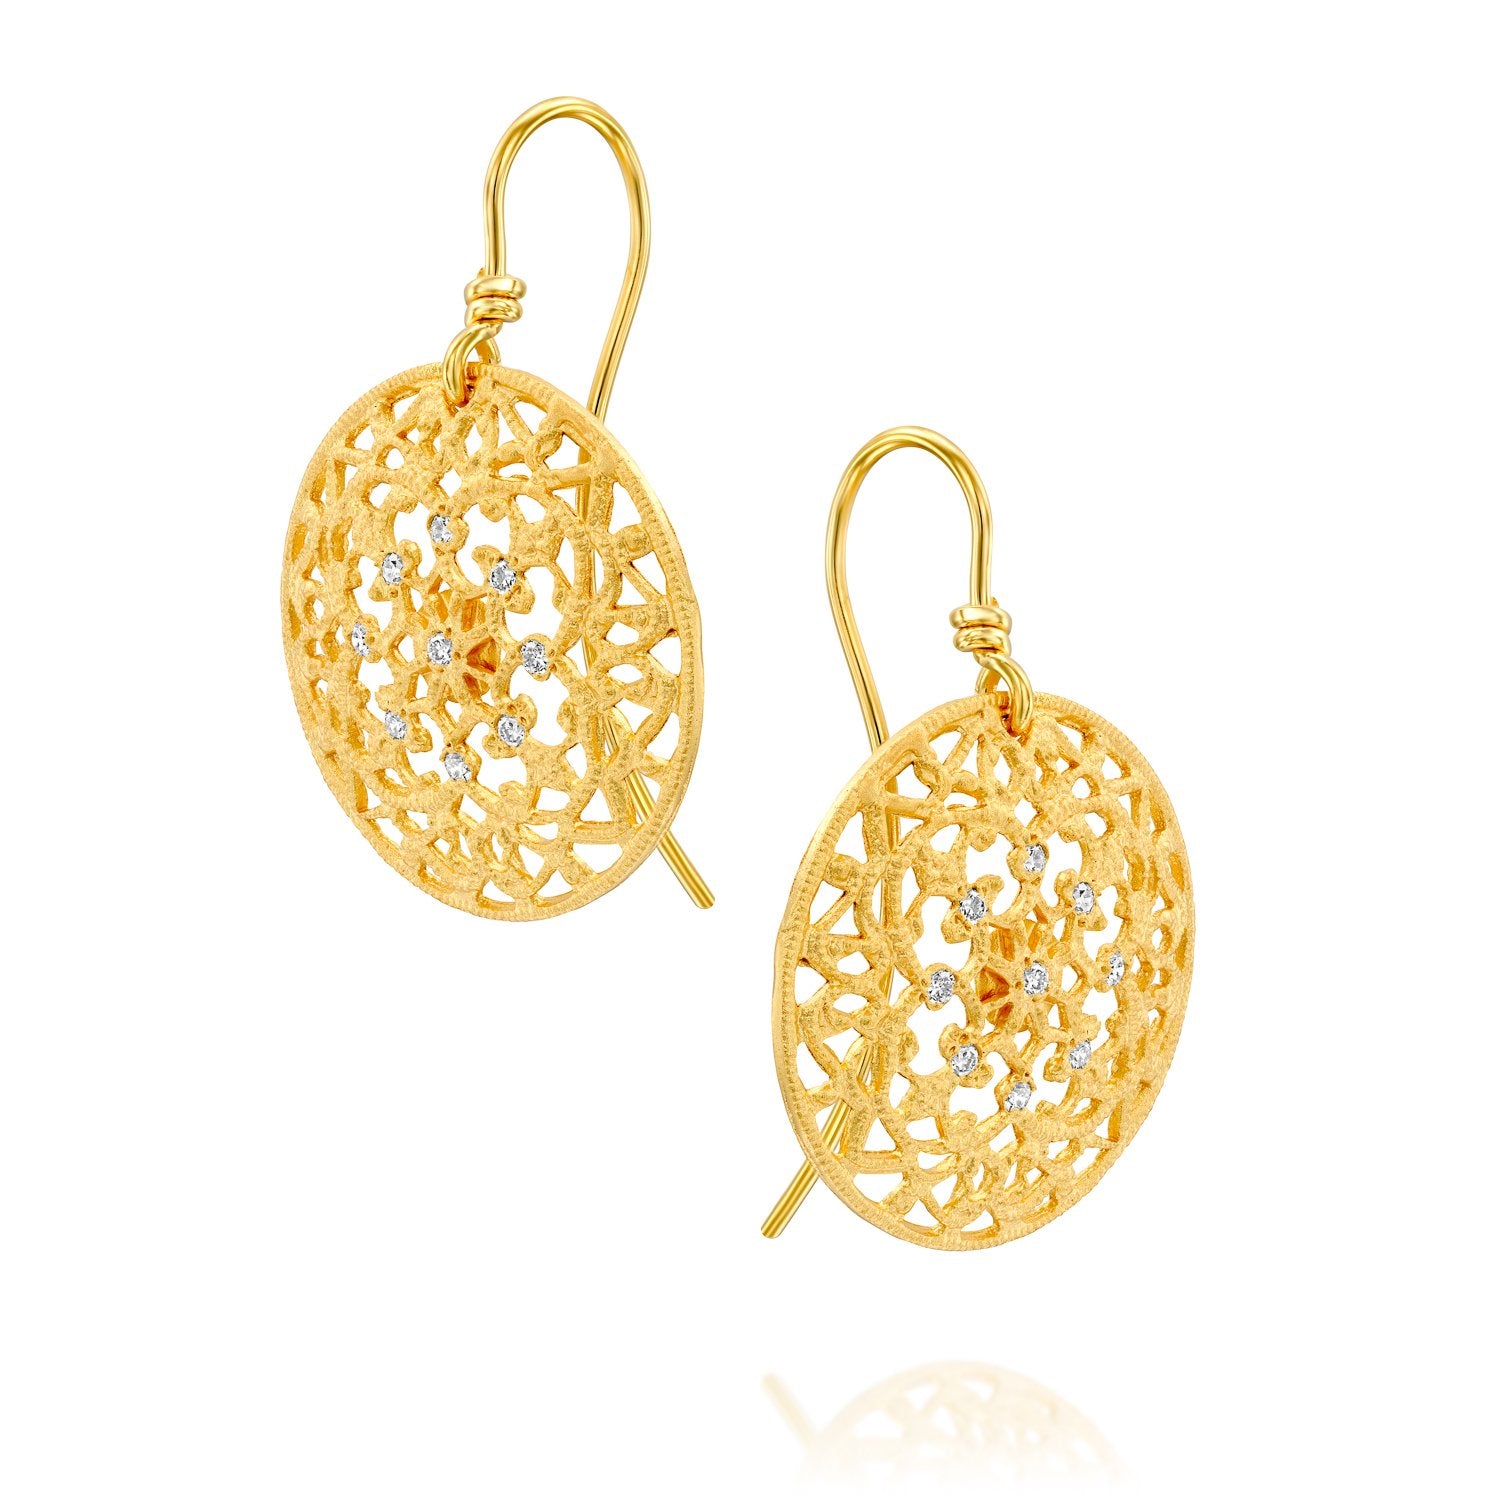 4450 - round filigree diamond drop earrings in 14kt yellow matte gold.  